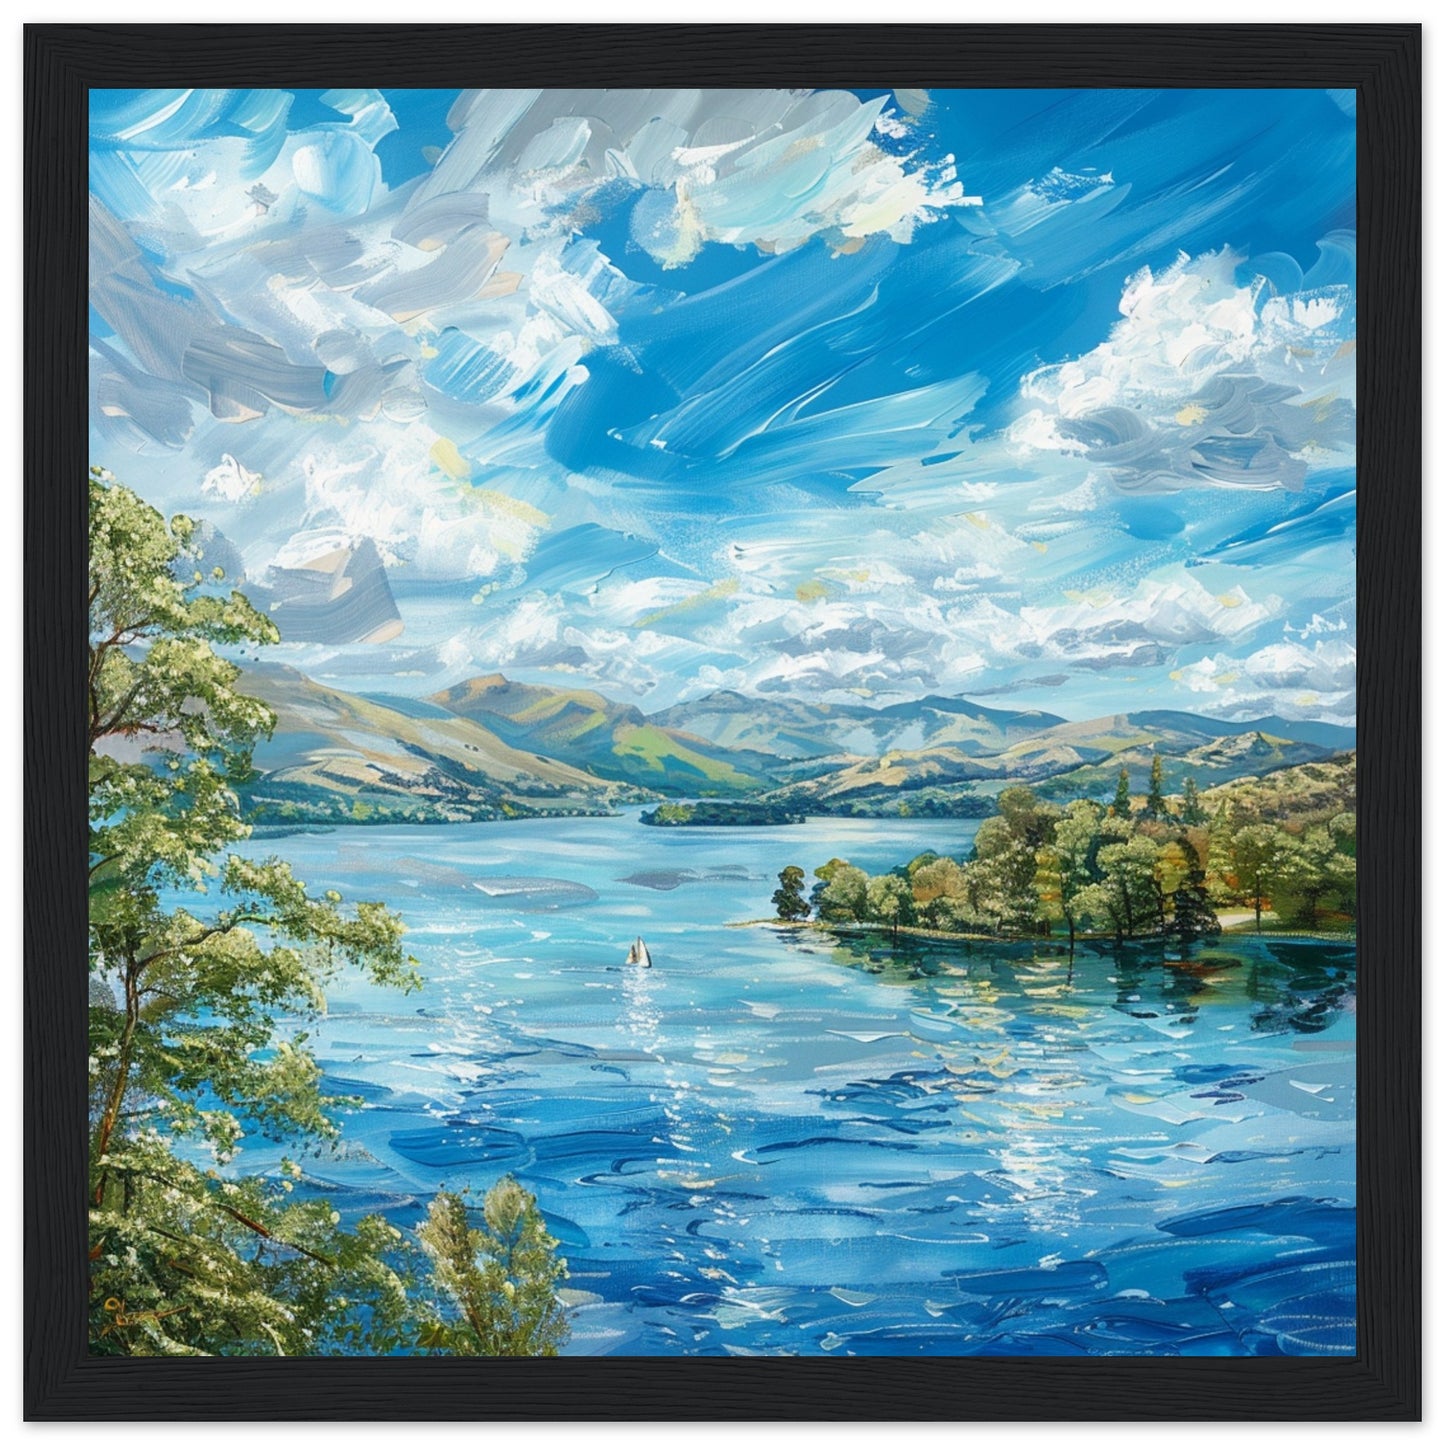 Lake Windermere’s Tranquil Beauty black framed art print | By Print Room Ltd